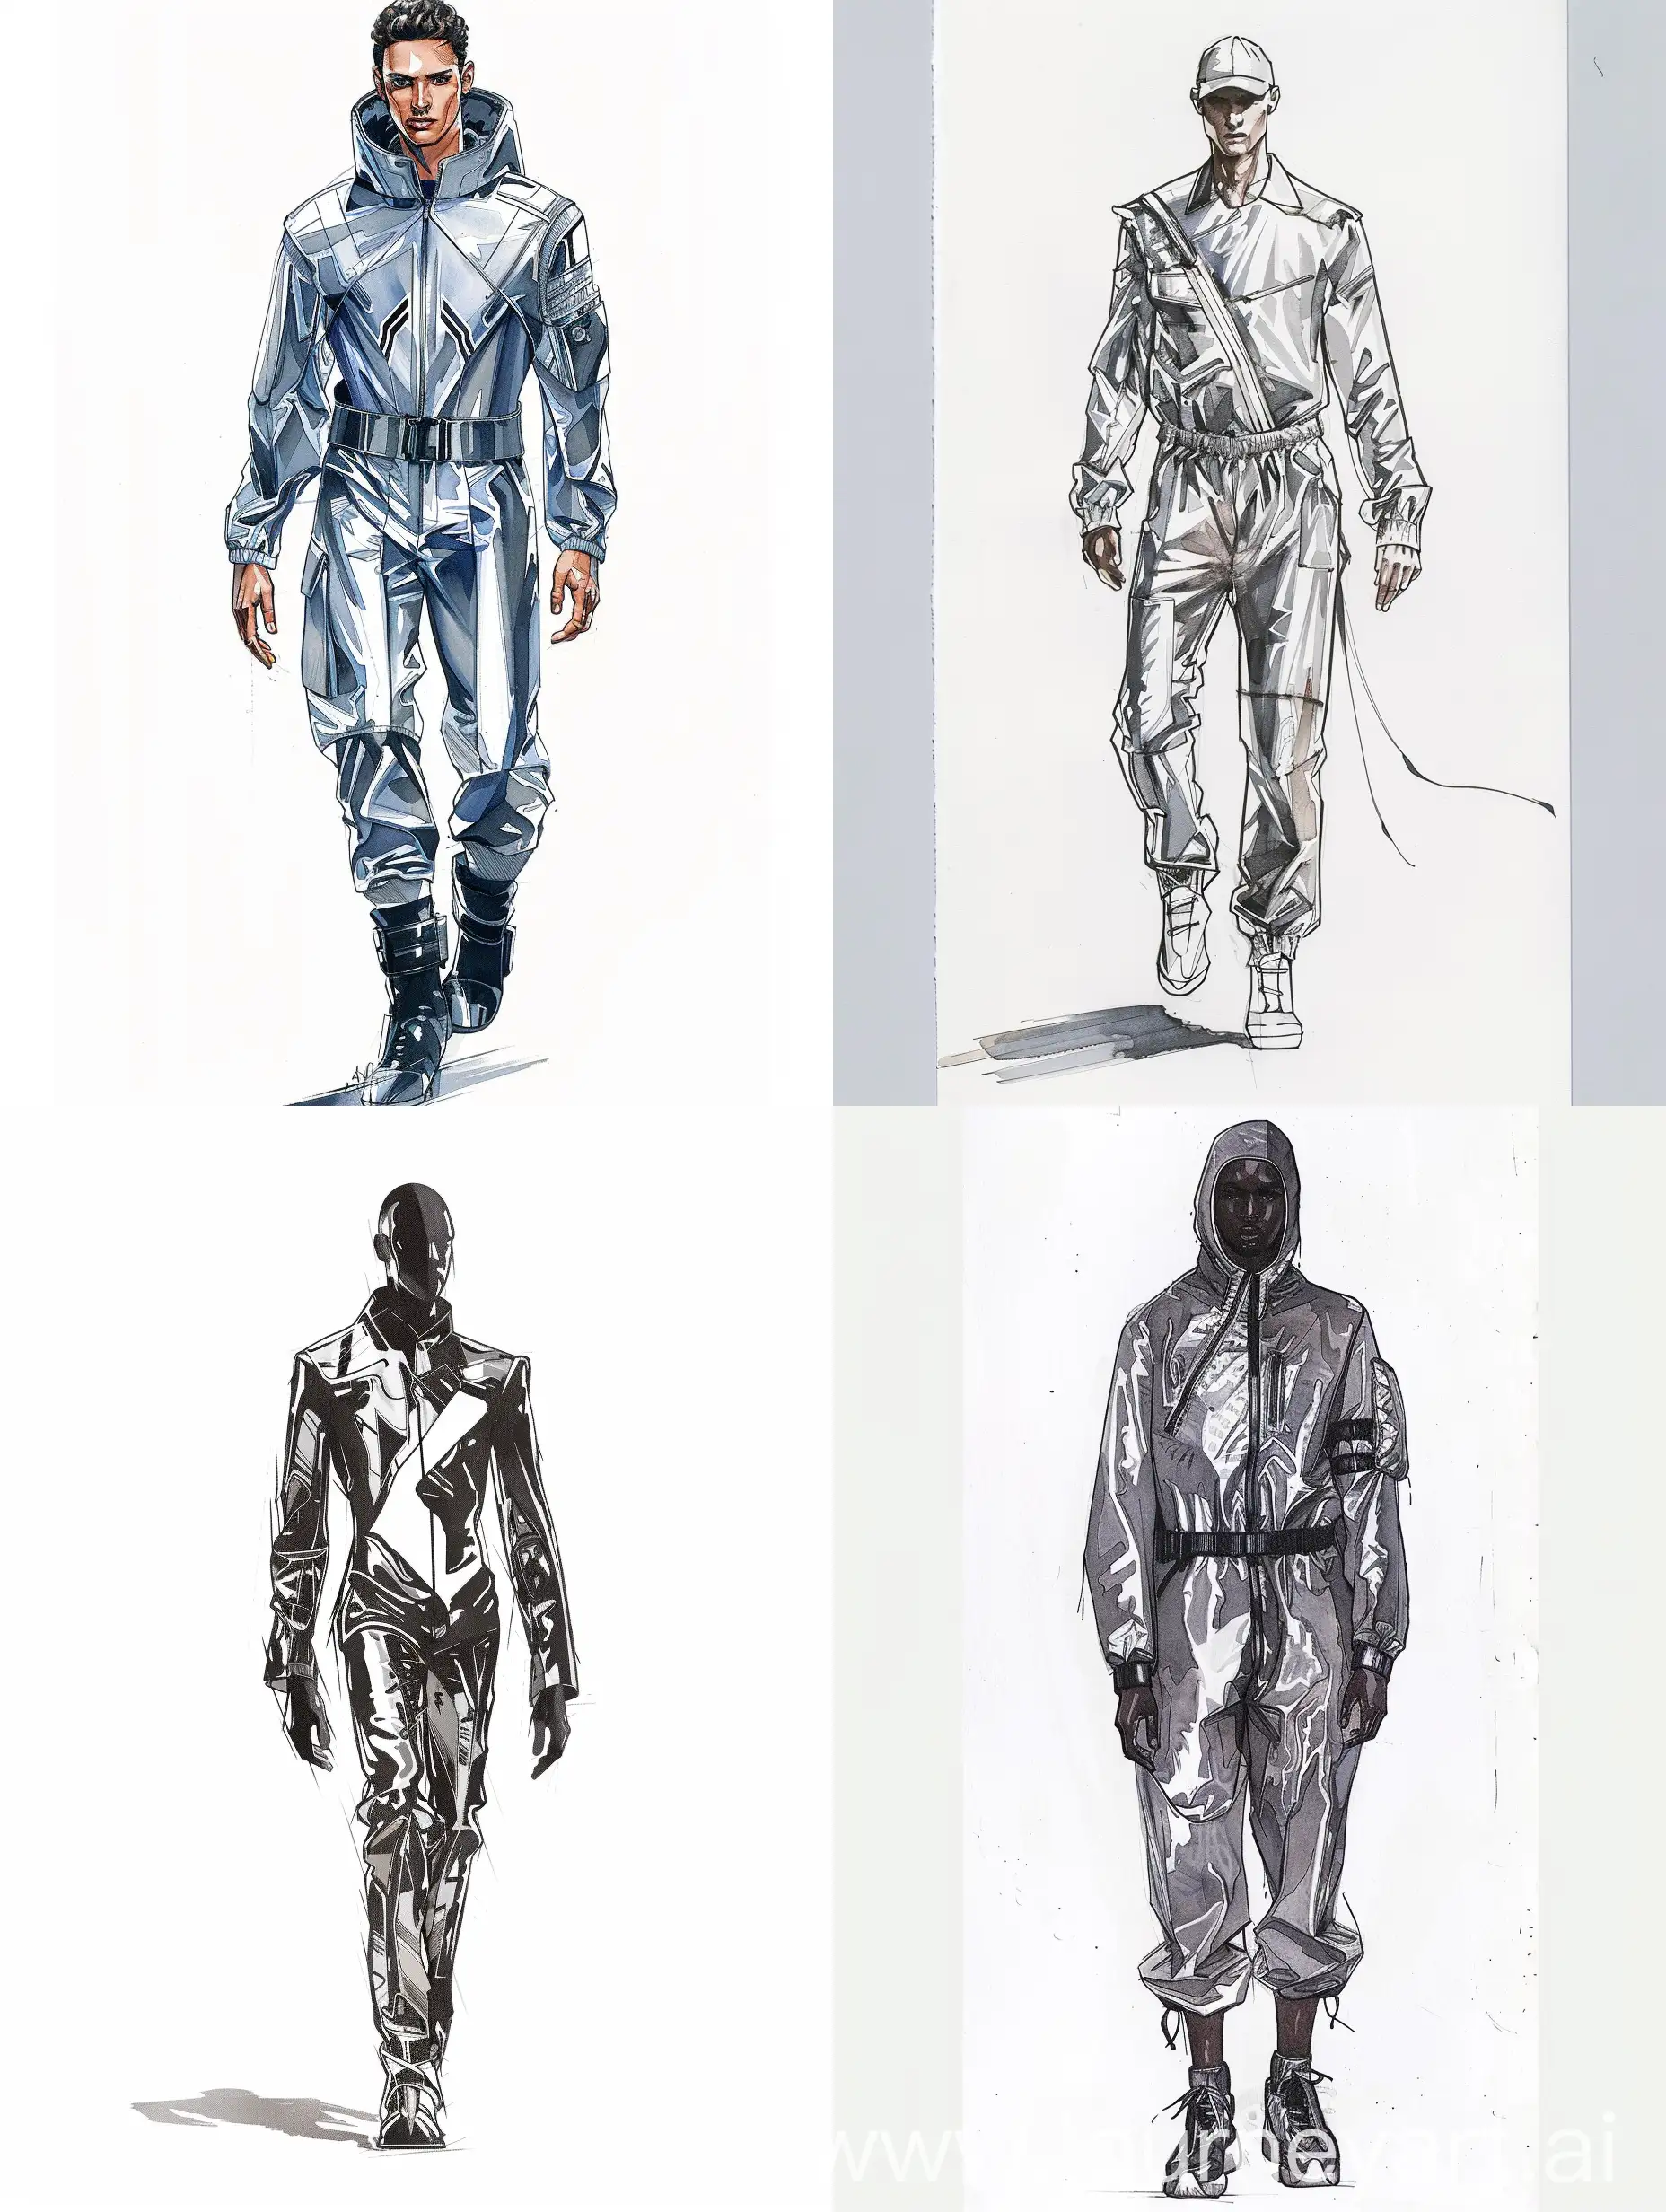 futuristic male utopic metallic jumpsuit fashion runway sketches minimalist illustration

